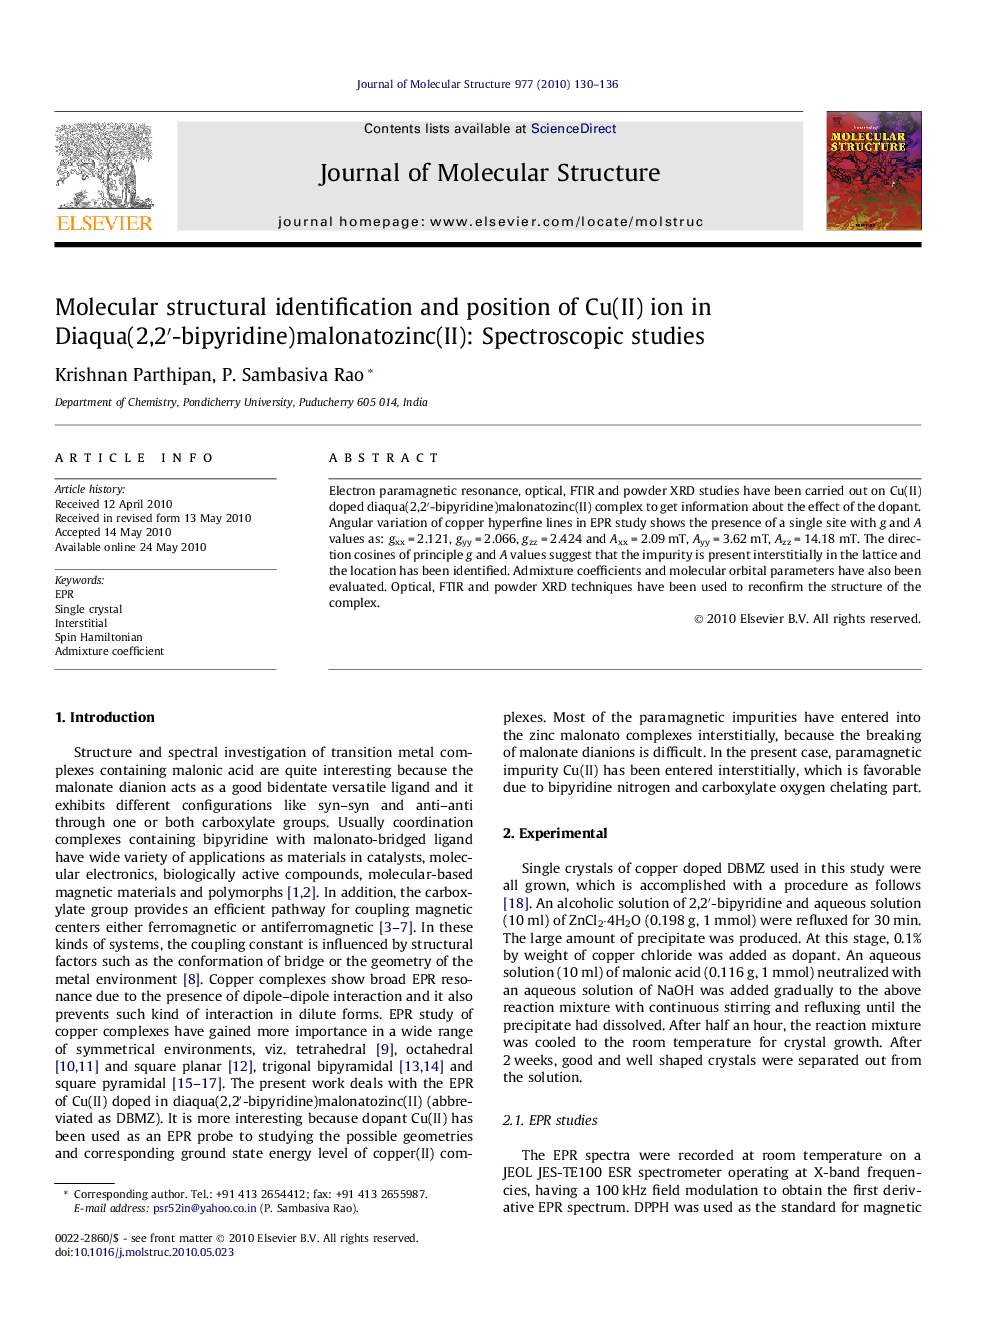 Molecular structural identification and position of Cu(II) ion in Diaqua(2,2′-bipyridine)malonatozinc(II): Spectroscopic studies